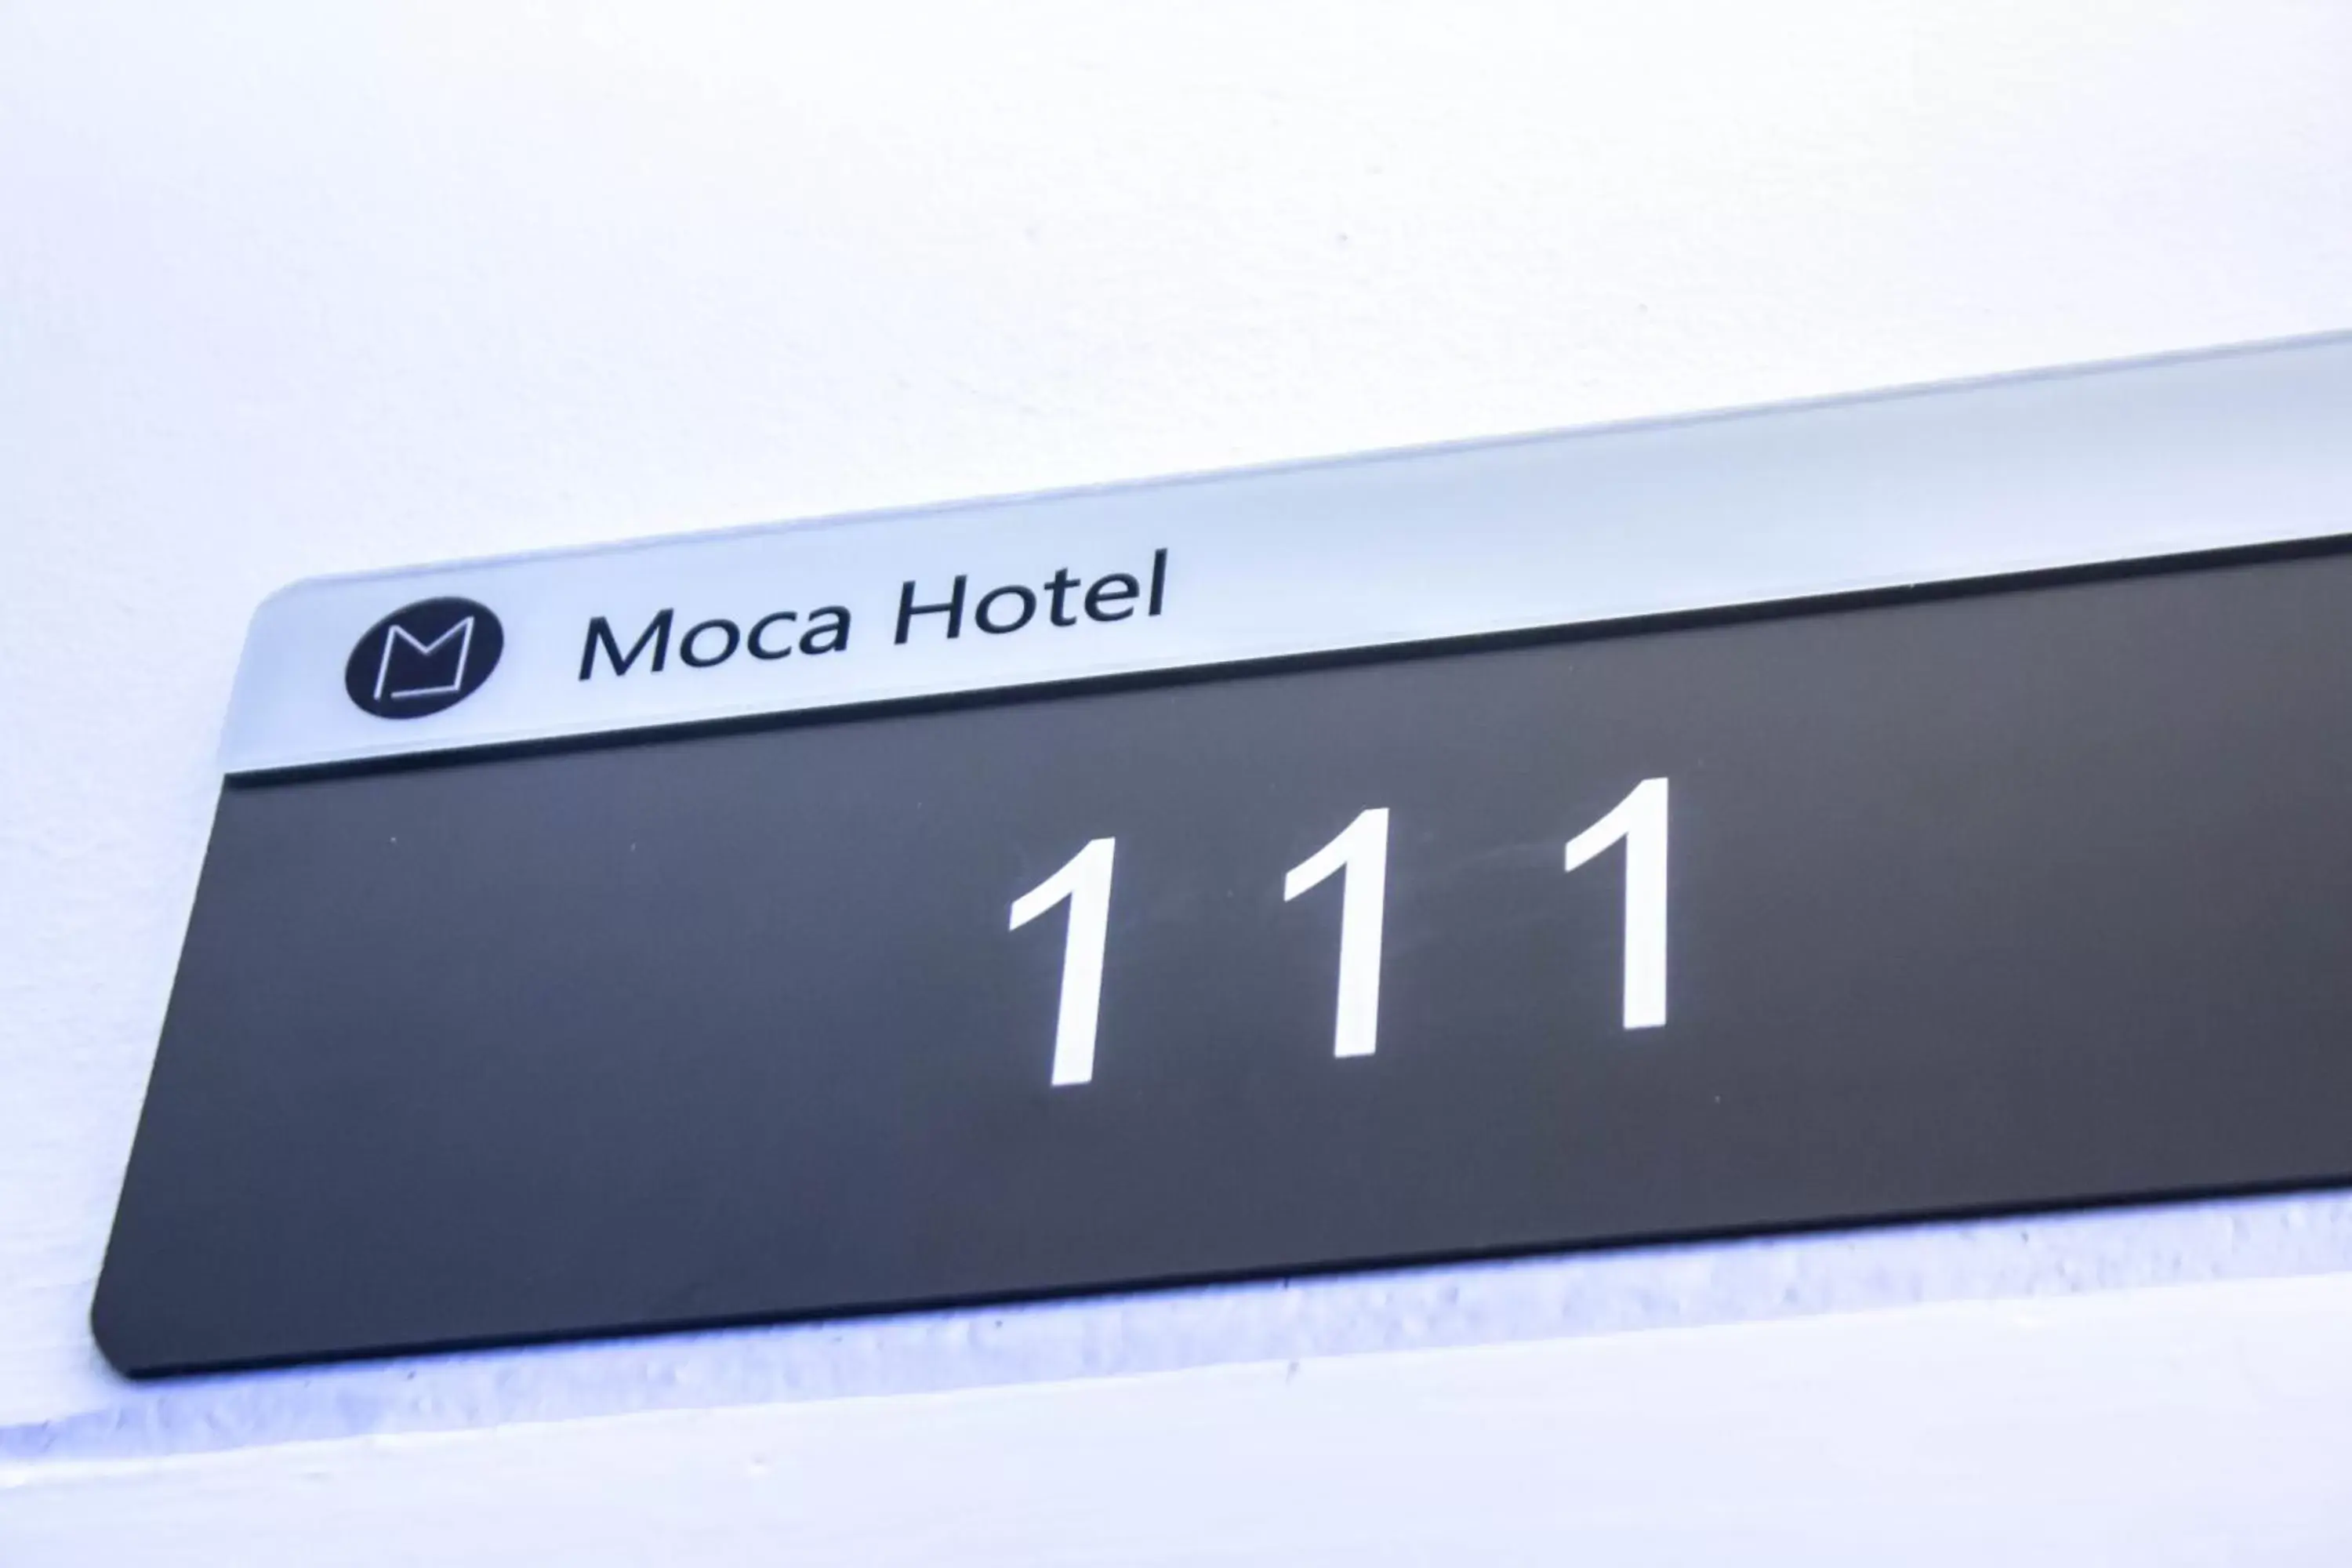 Property logo or sign in Moca Hotel